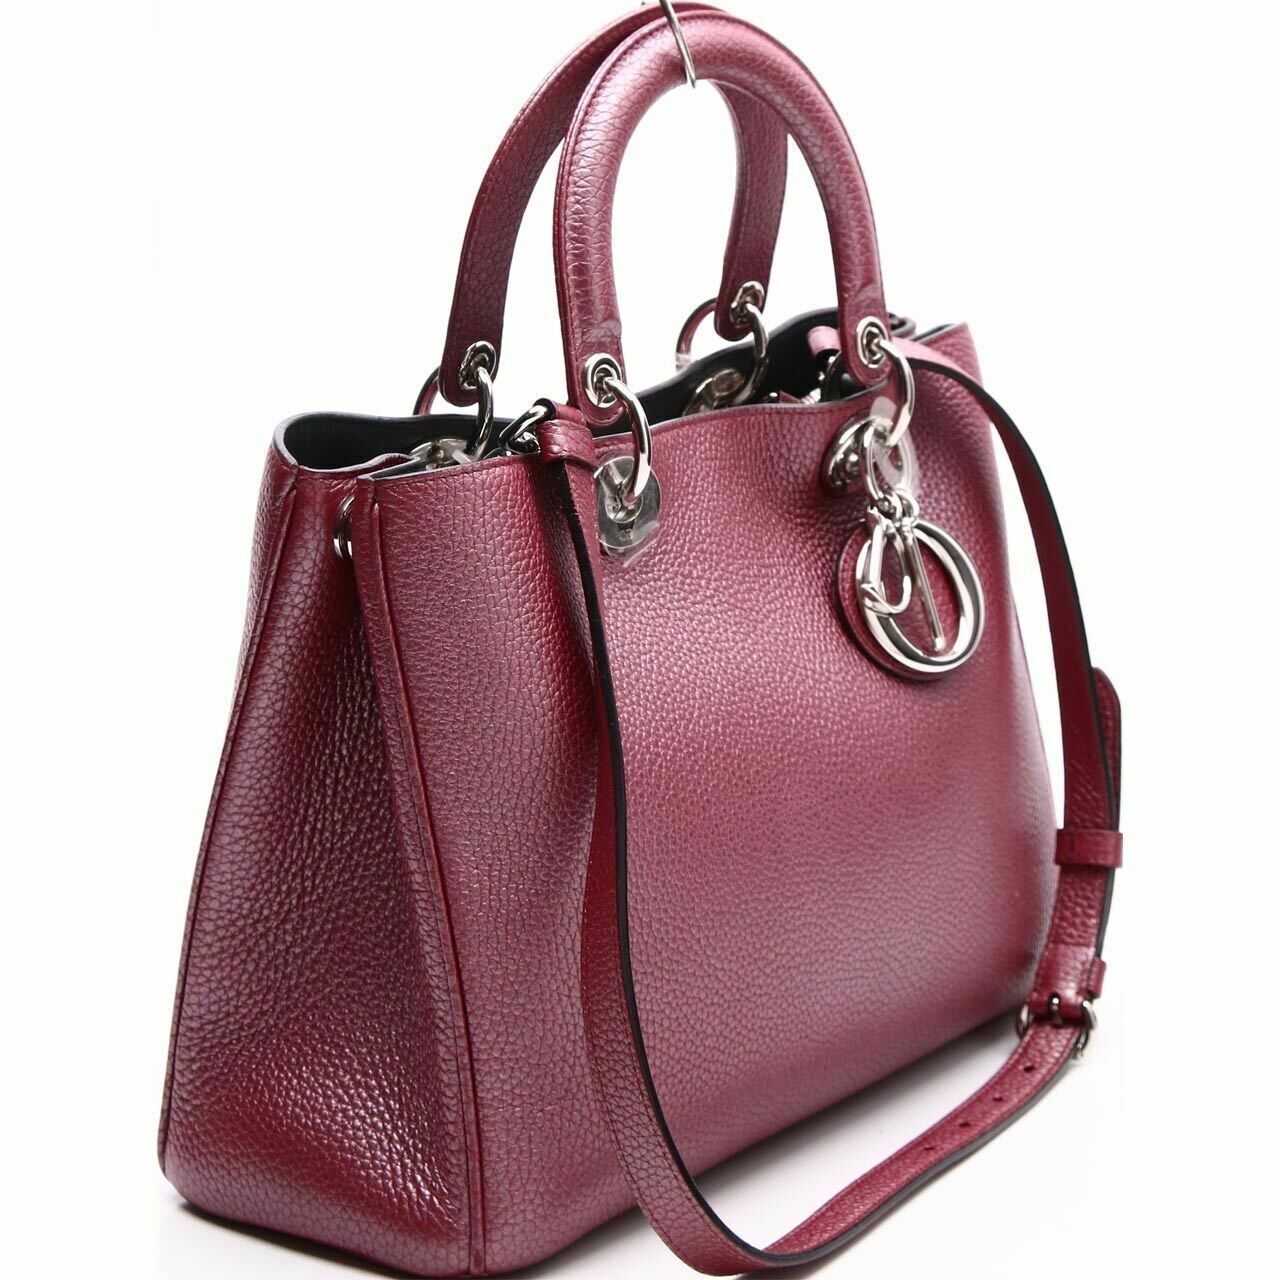 Christian Dior Medium Diorissimo Bag in Maroon Satchel Bag